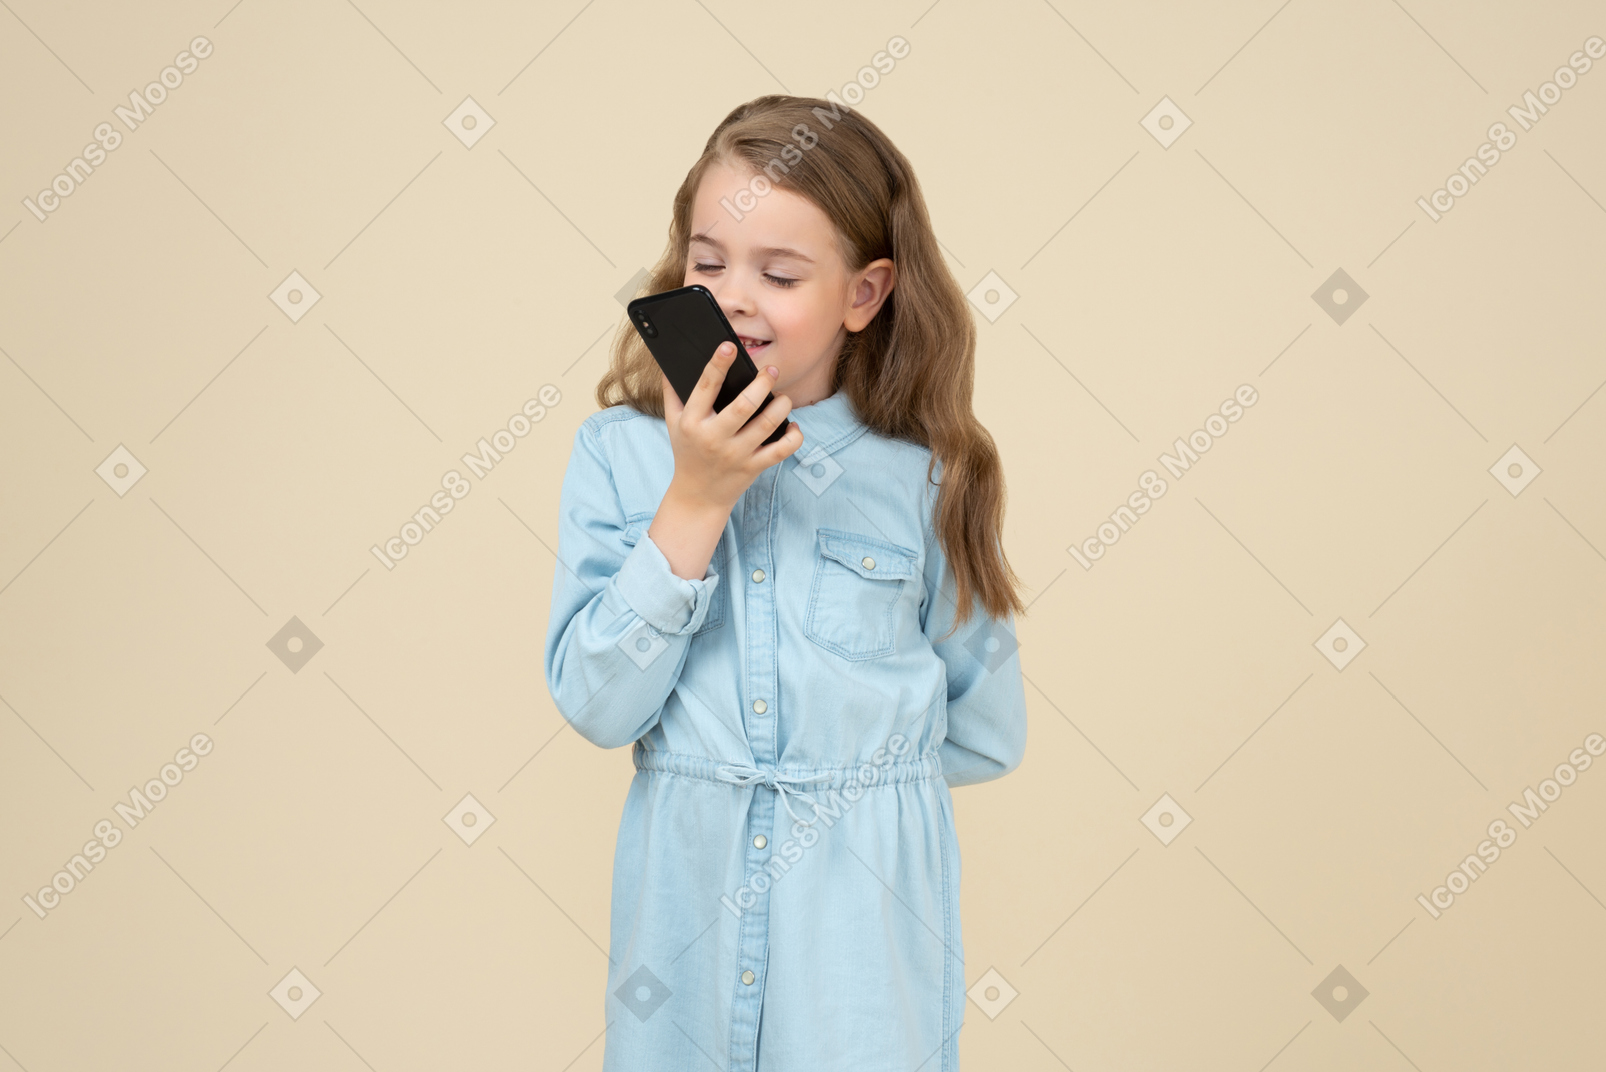 Cute little girl holding a smartphone